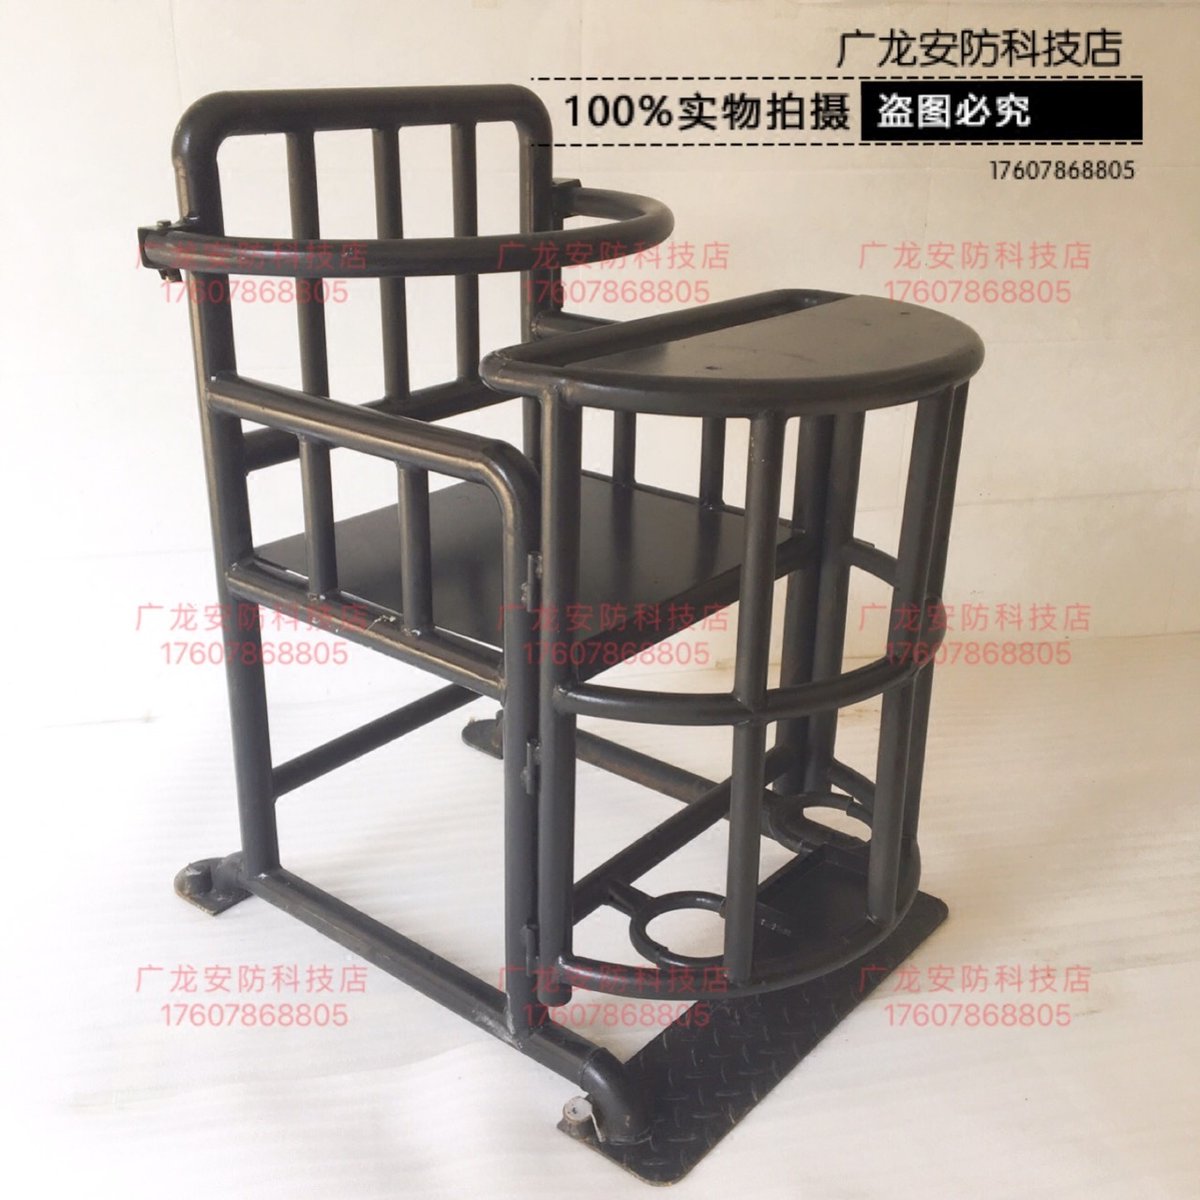 interrogation-chairs-taobao-china.jpg